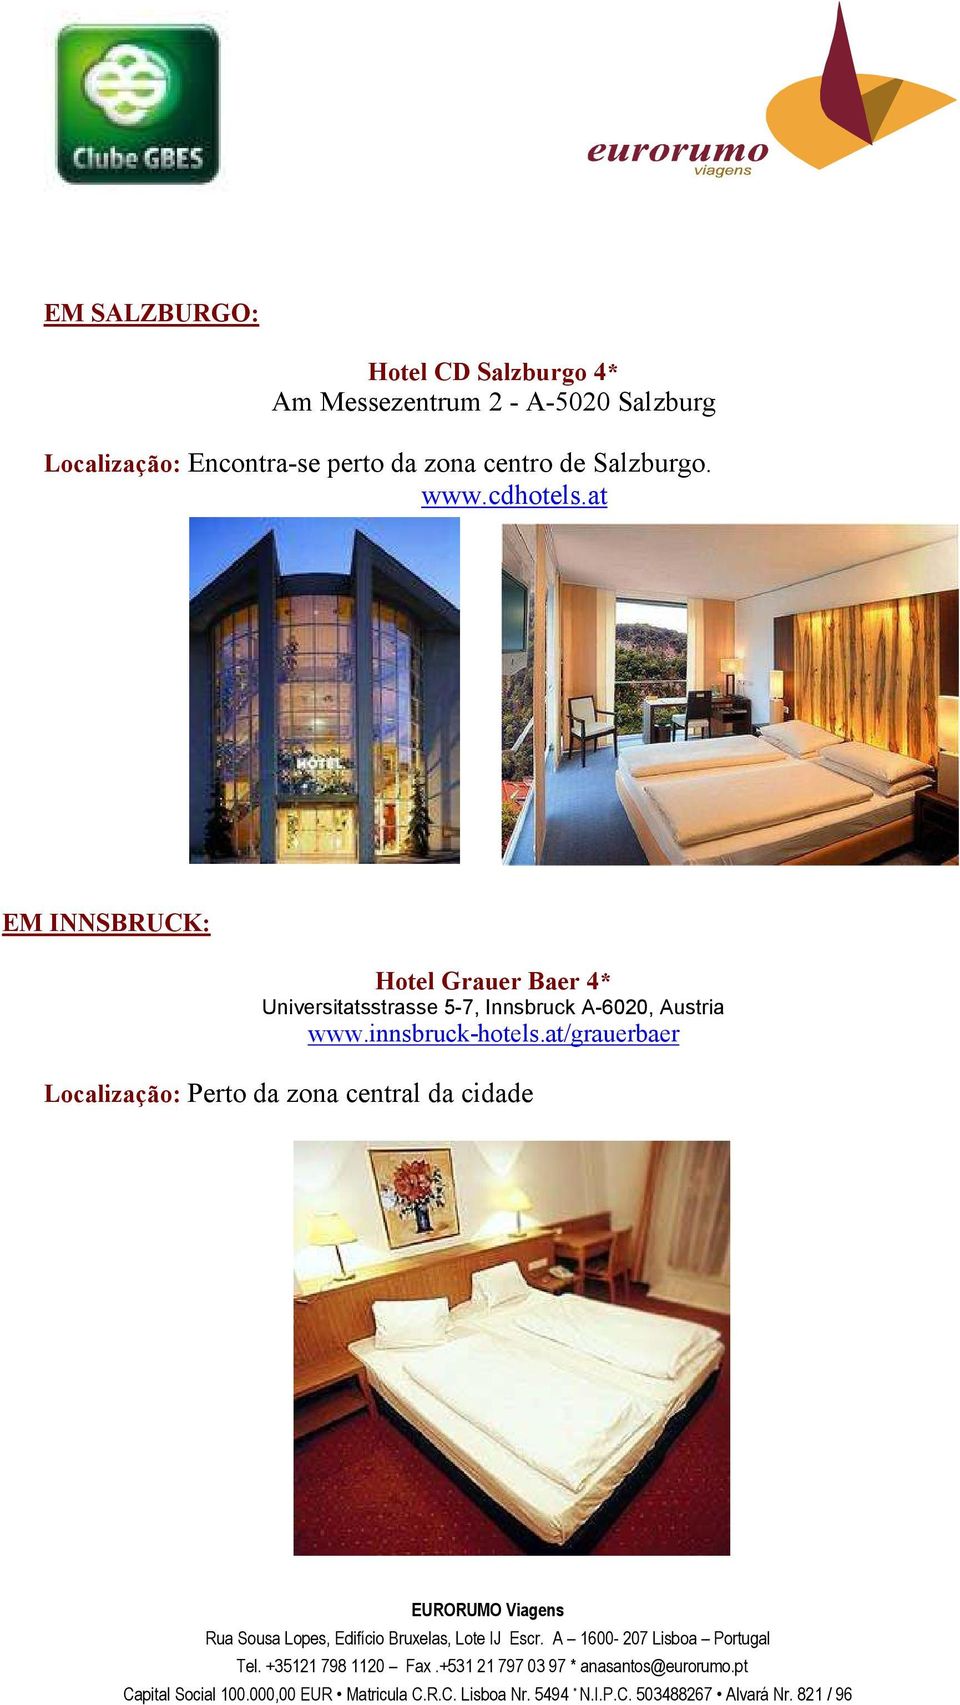 at EM INNSBRUCK: Hotel Grauer Baer 4* Universitatsstrasse 5-7, Innsbruck